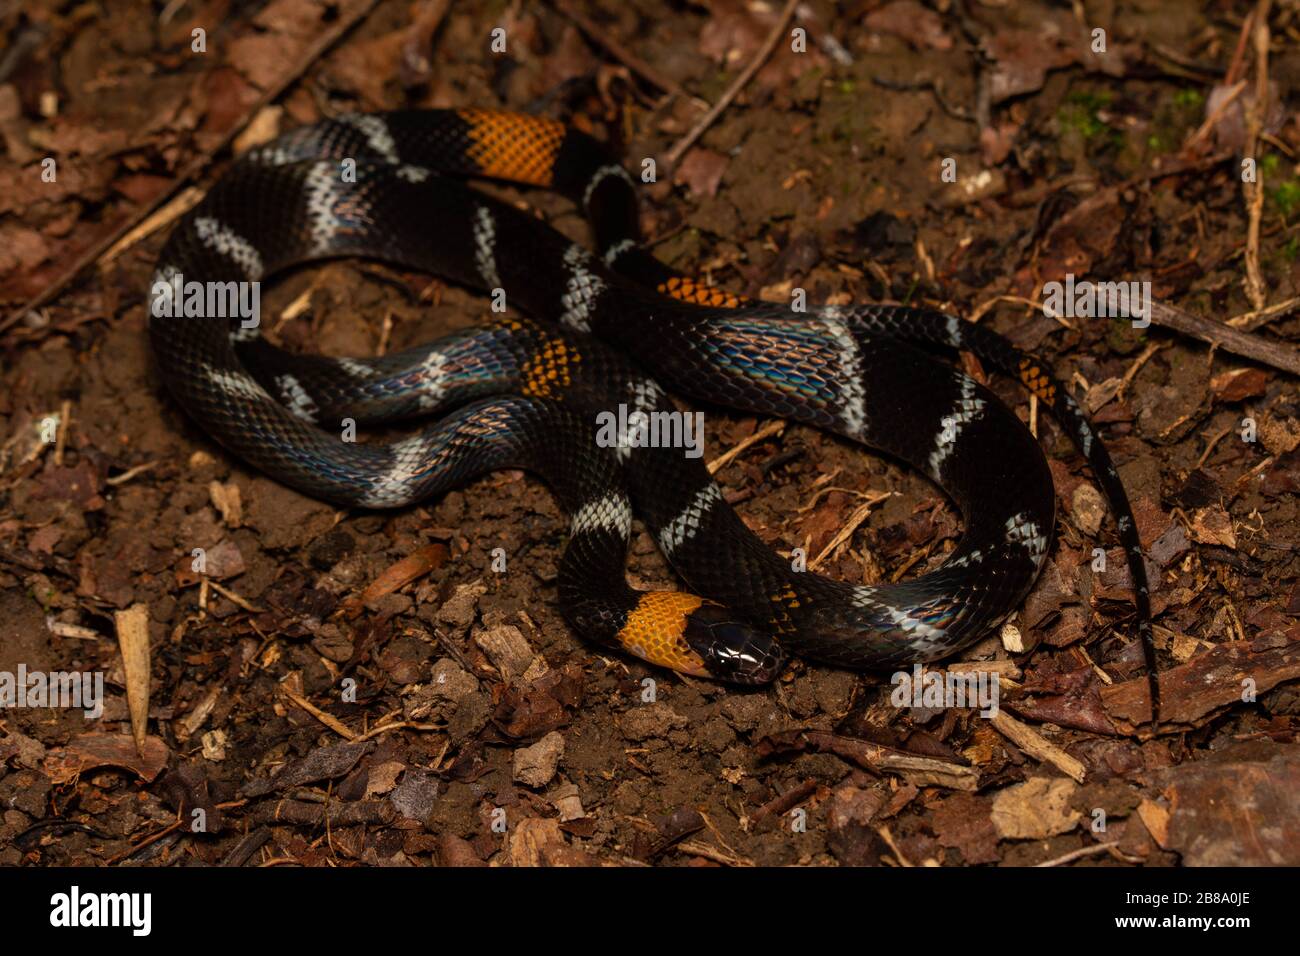 Black-headed Calico Snake (Oxyrhopus vanidicus) from the Peruvian Amazon  Stock Photo - Alamy